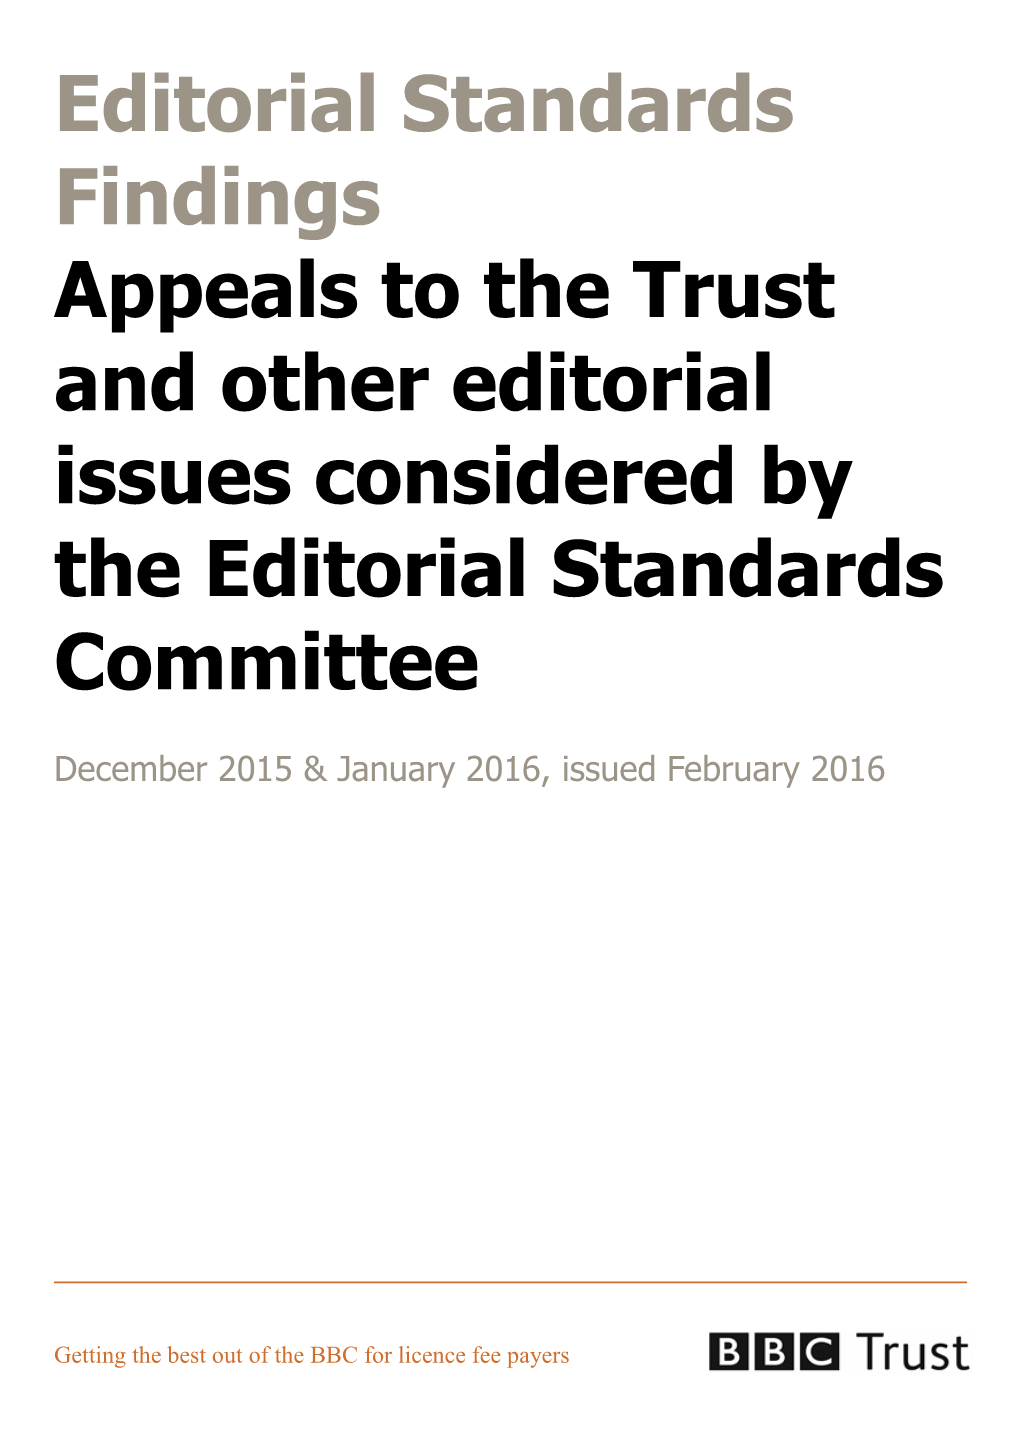 Editorial Standards Committee Bulletin